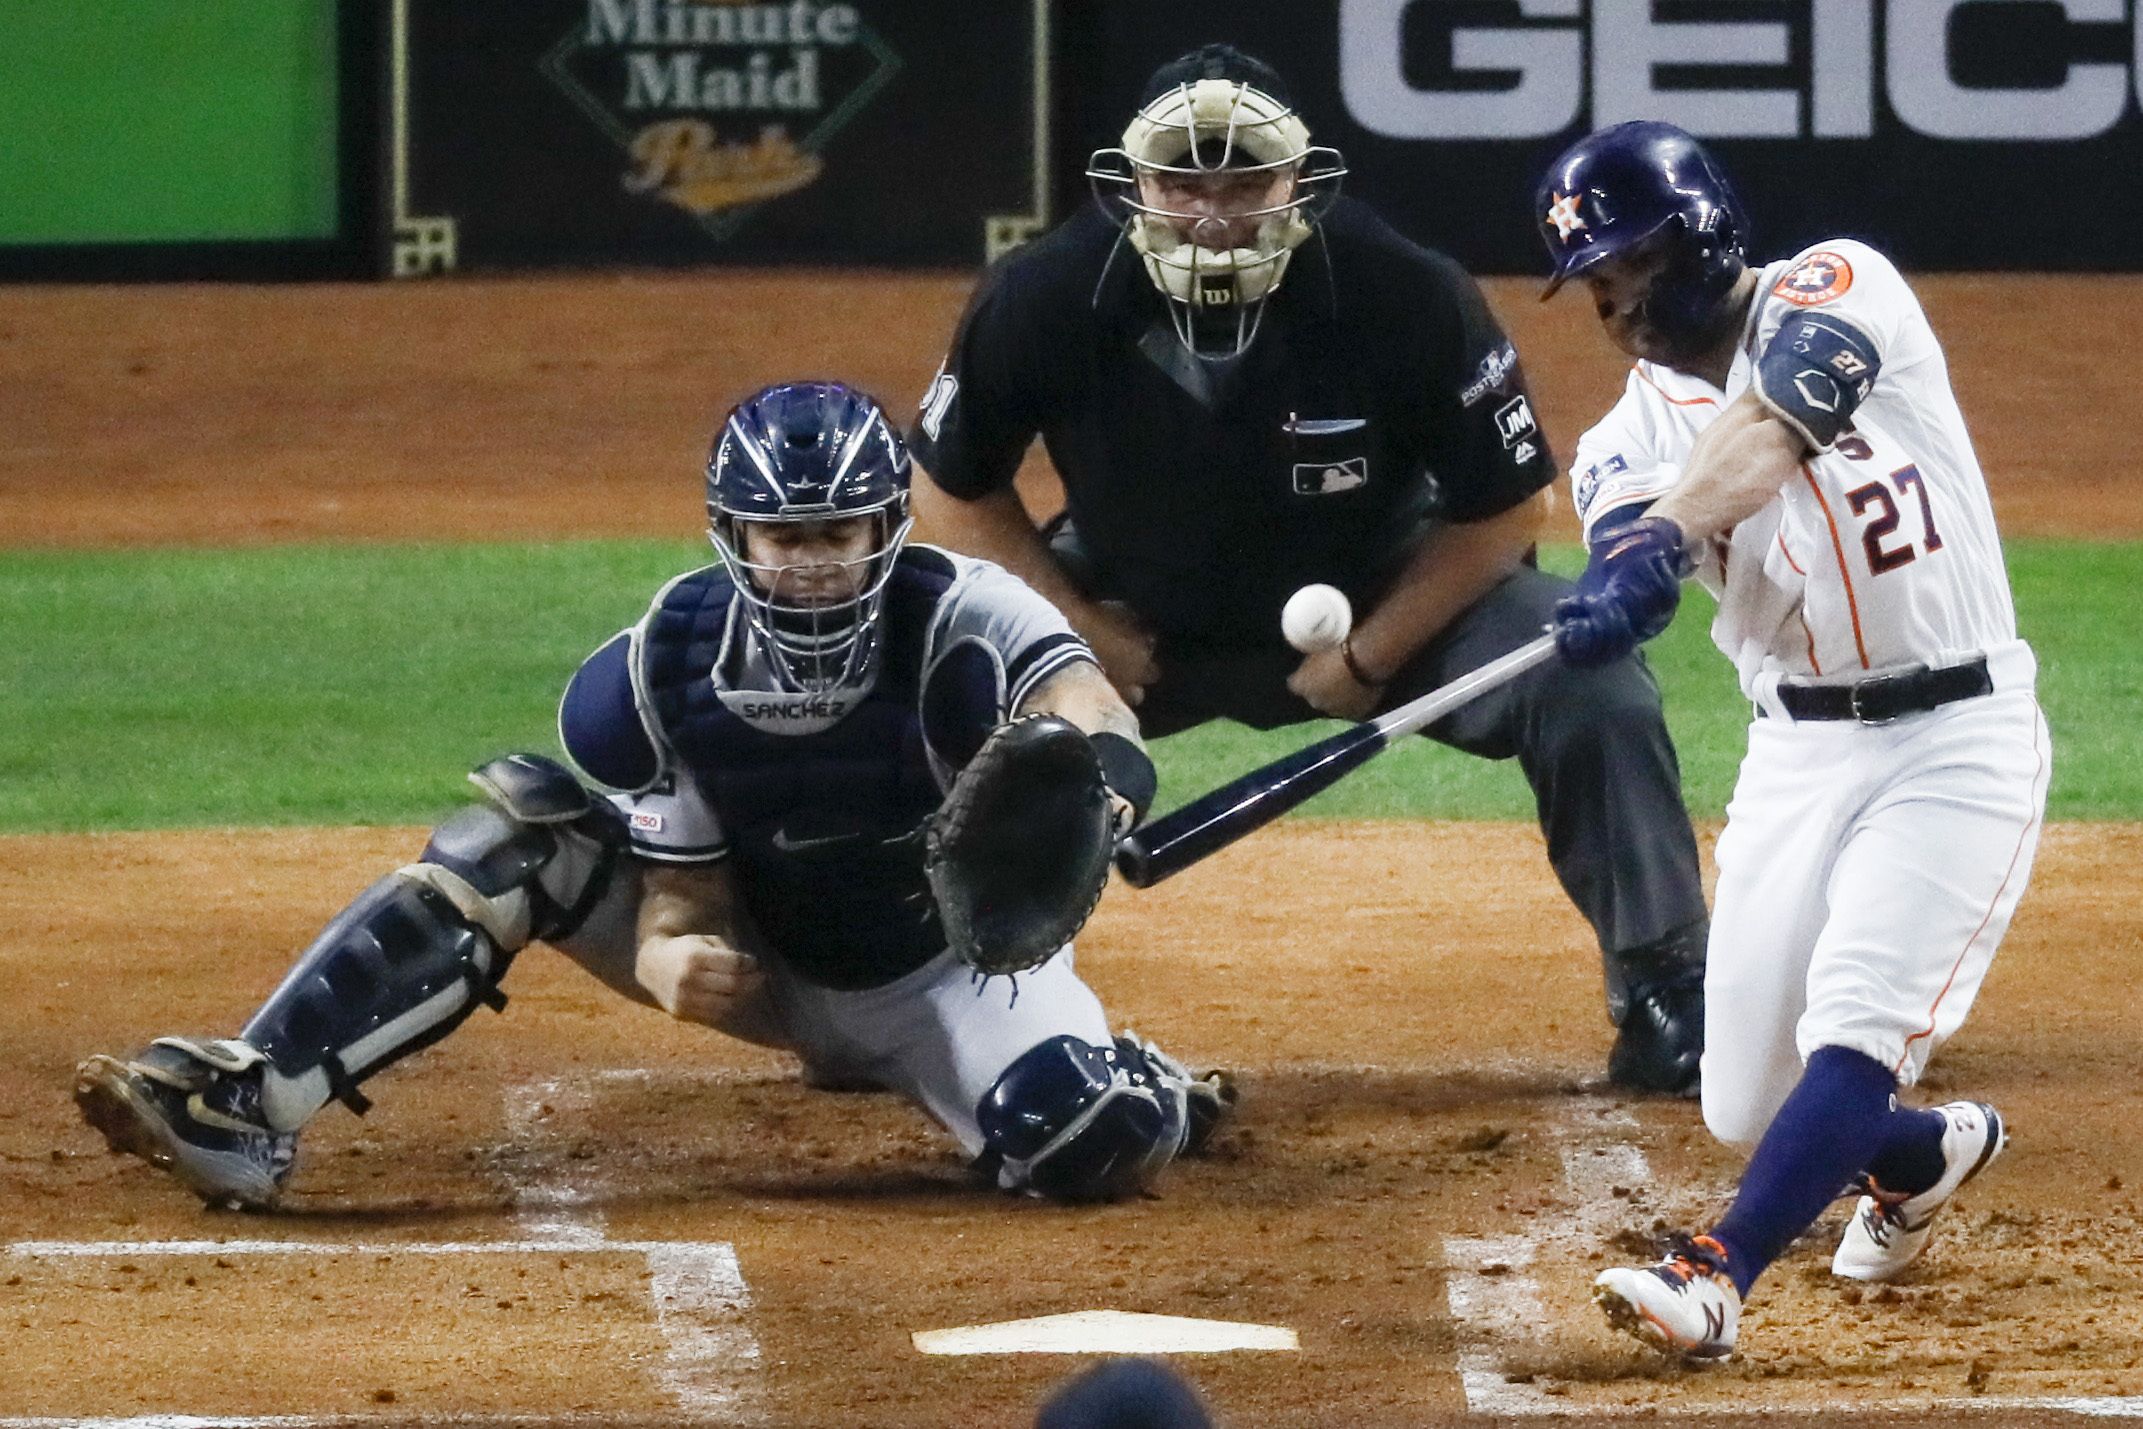 Yankees' season ends with heartbreak as Astros' Jose Altuve hits